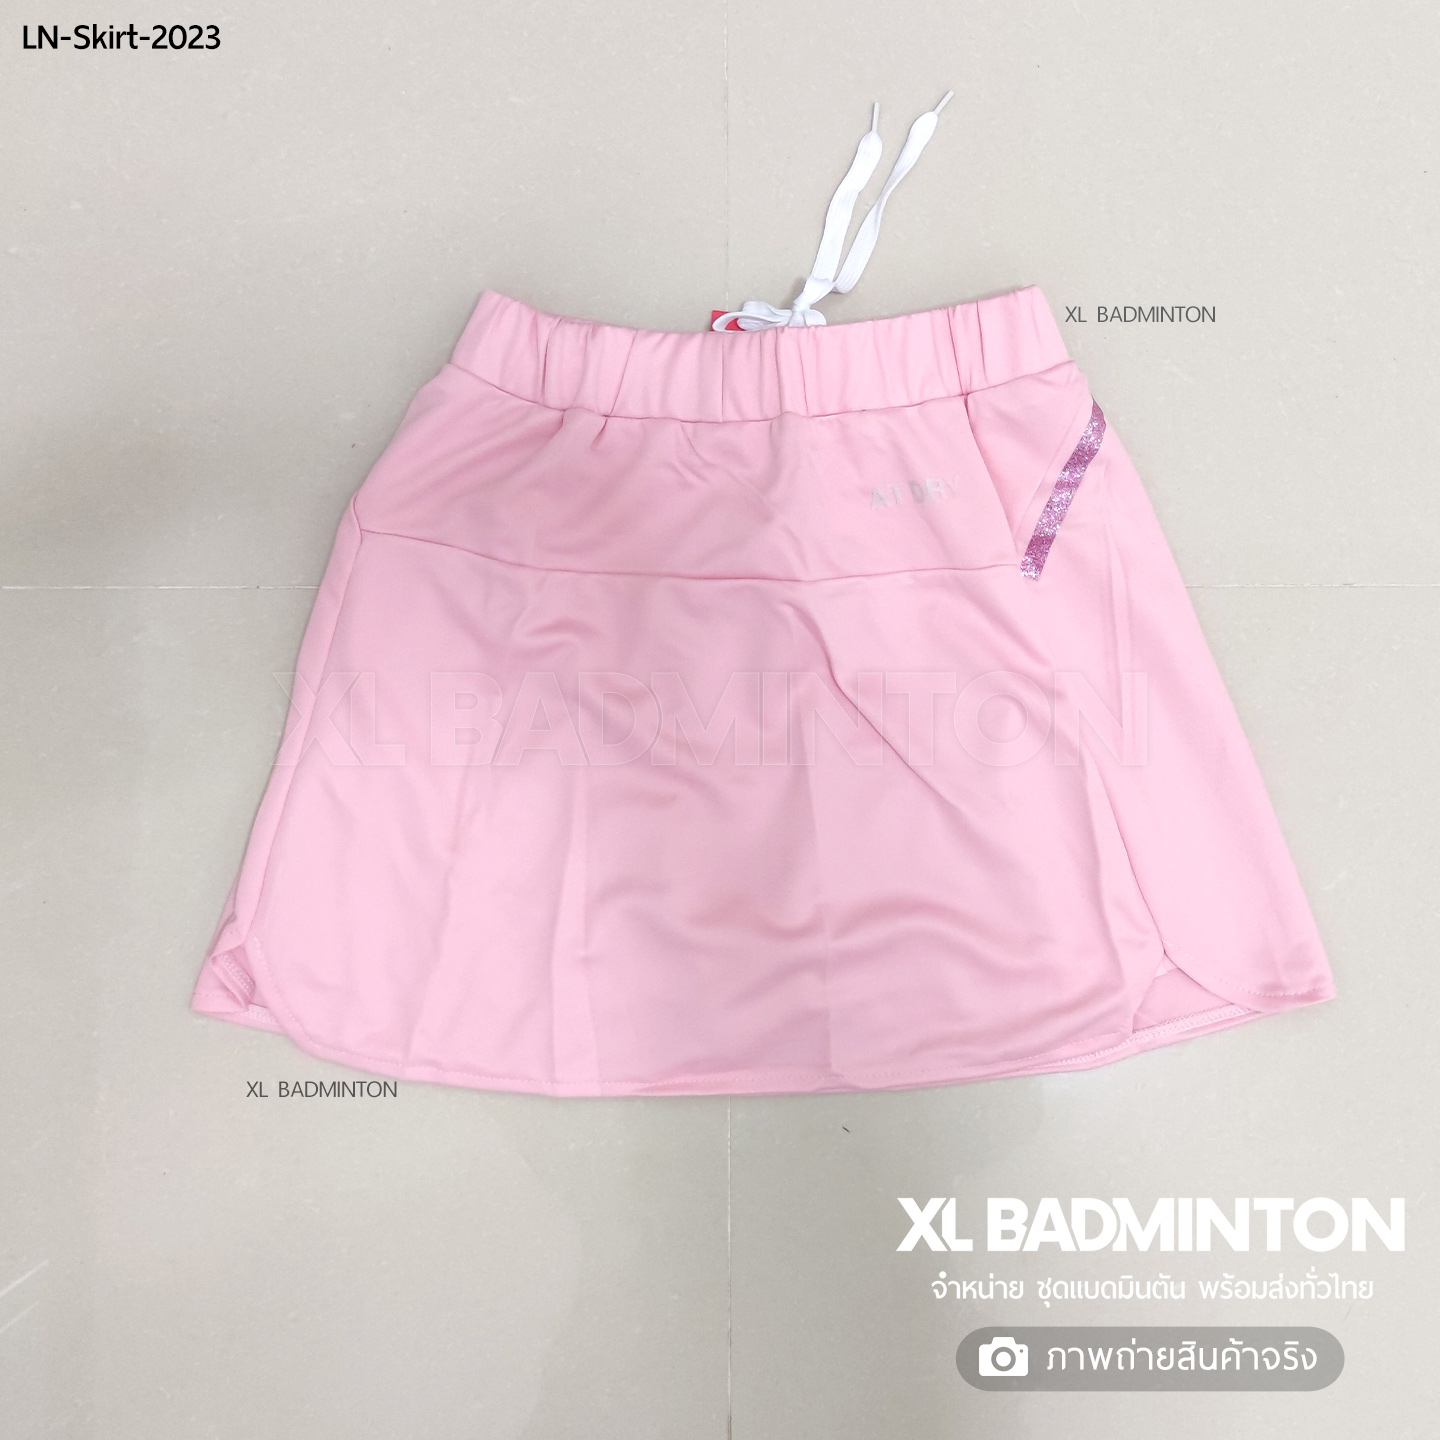 ln-skirt-2023-pink-3